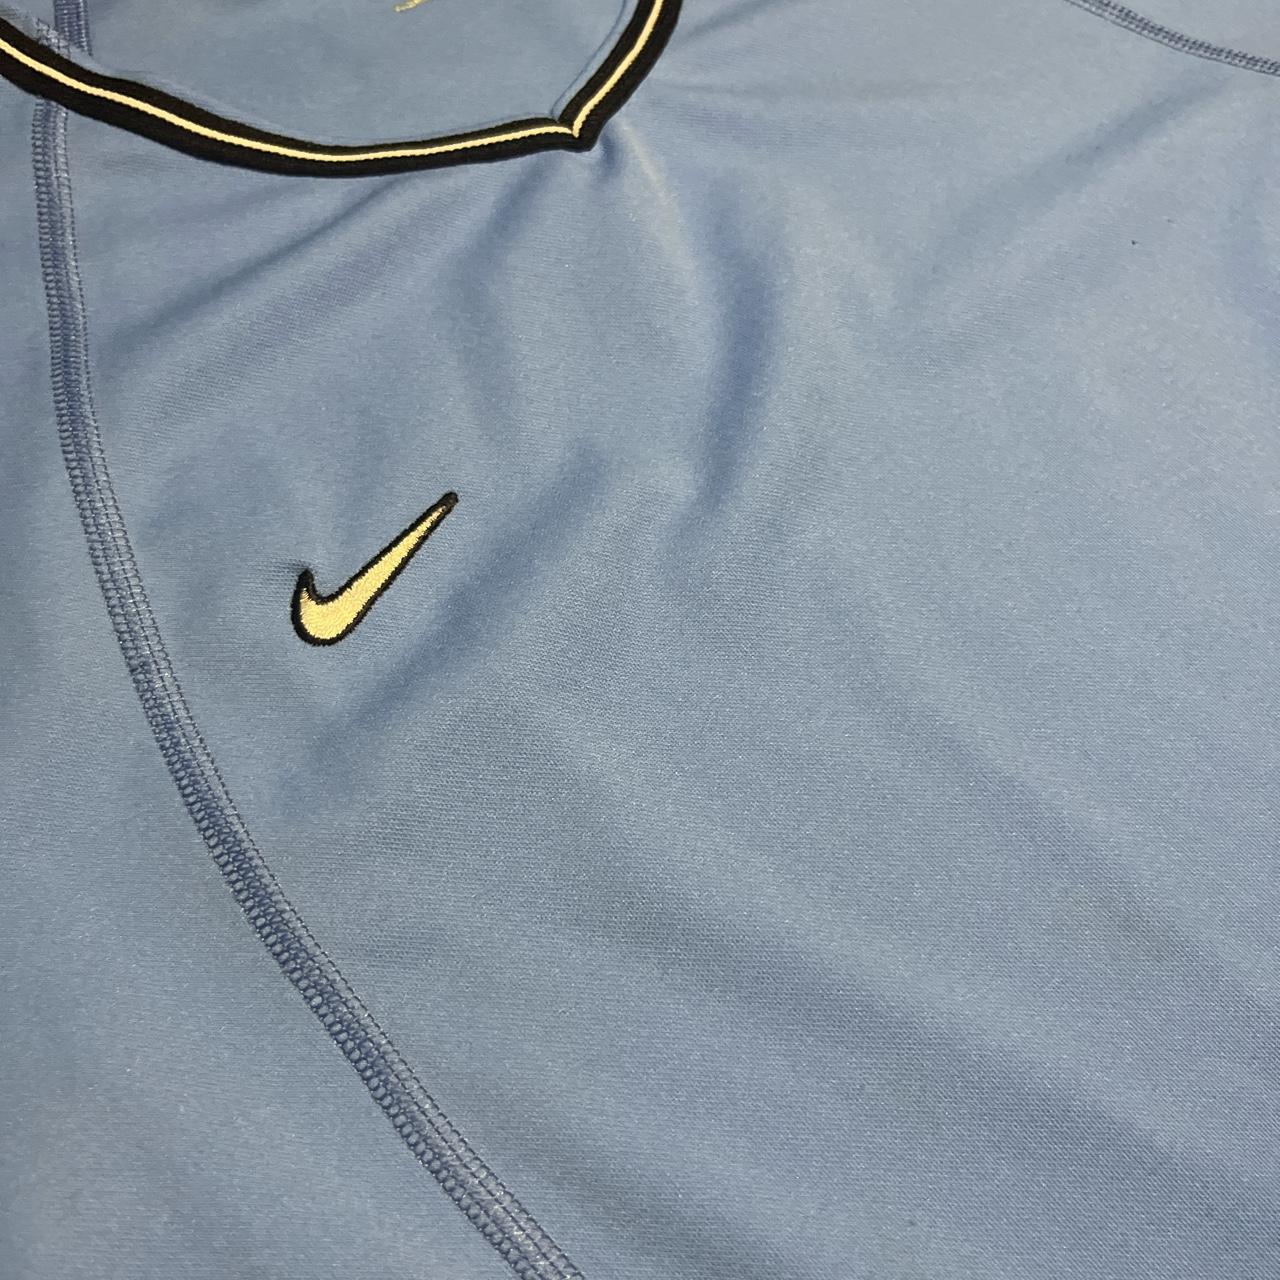 Nike Men's Blue and White T-shirt (2)